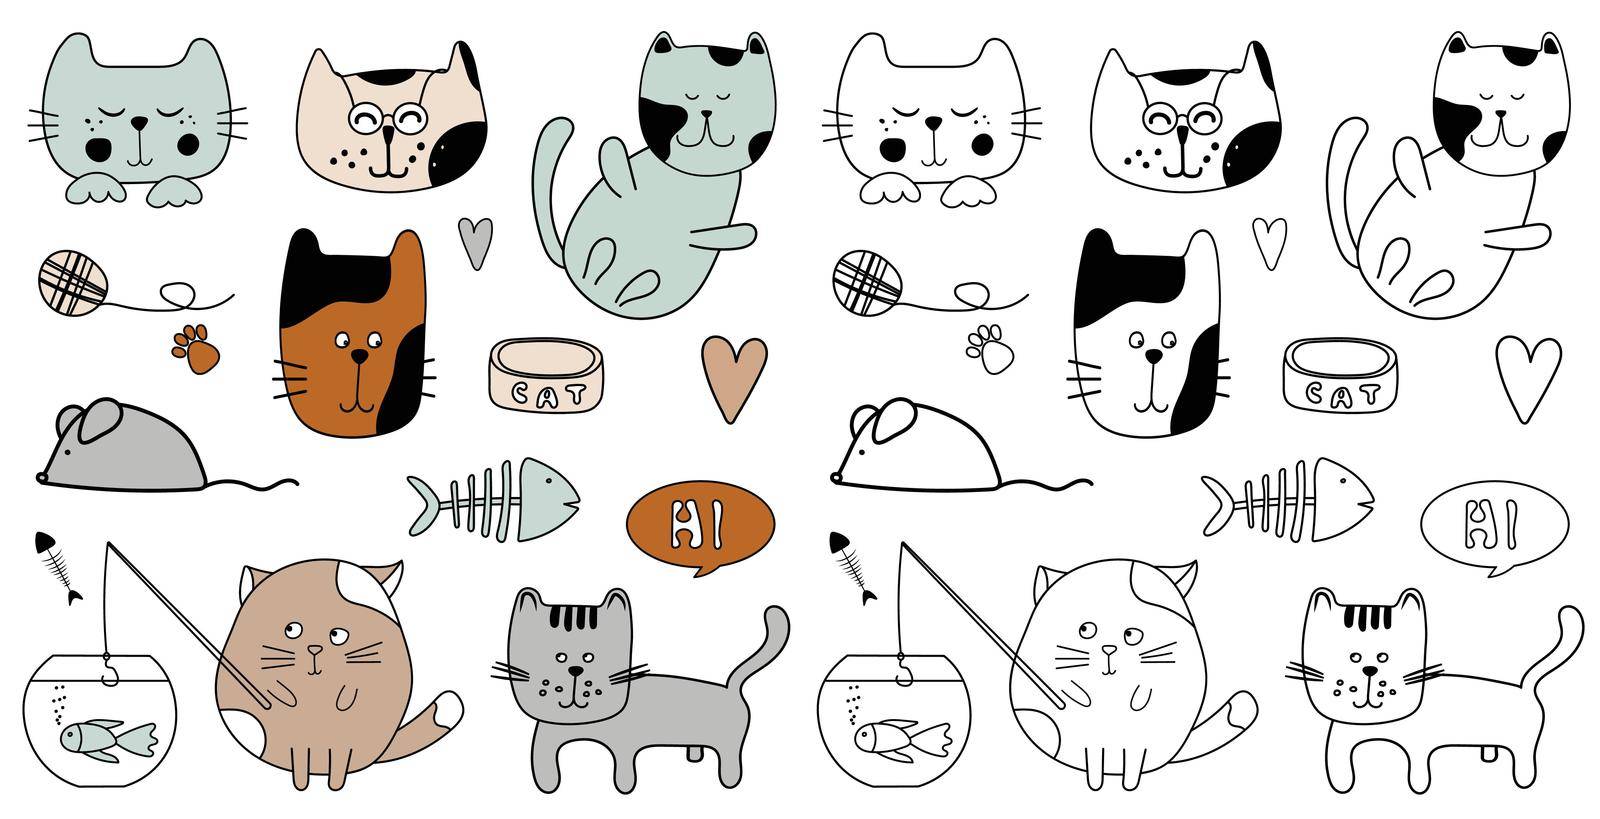 Kitty cats design by tan4ikk1